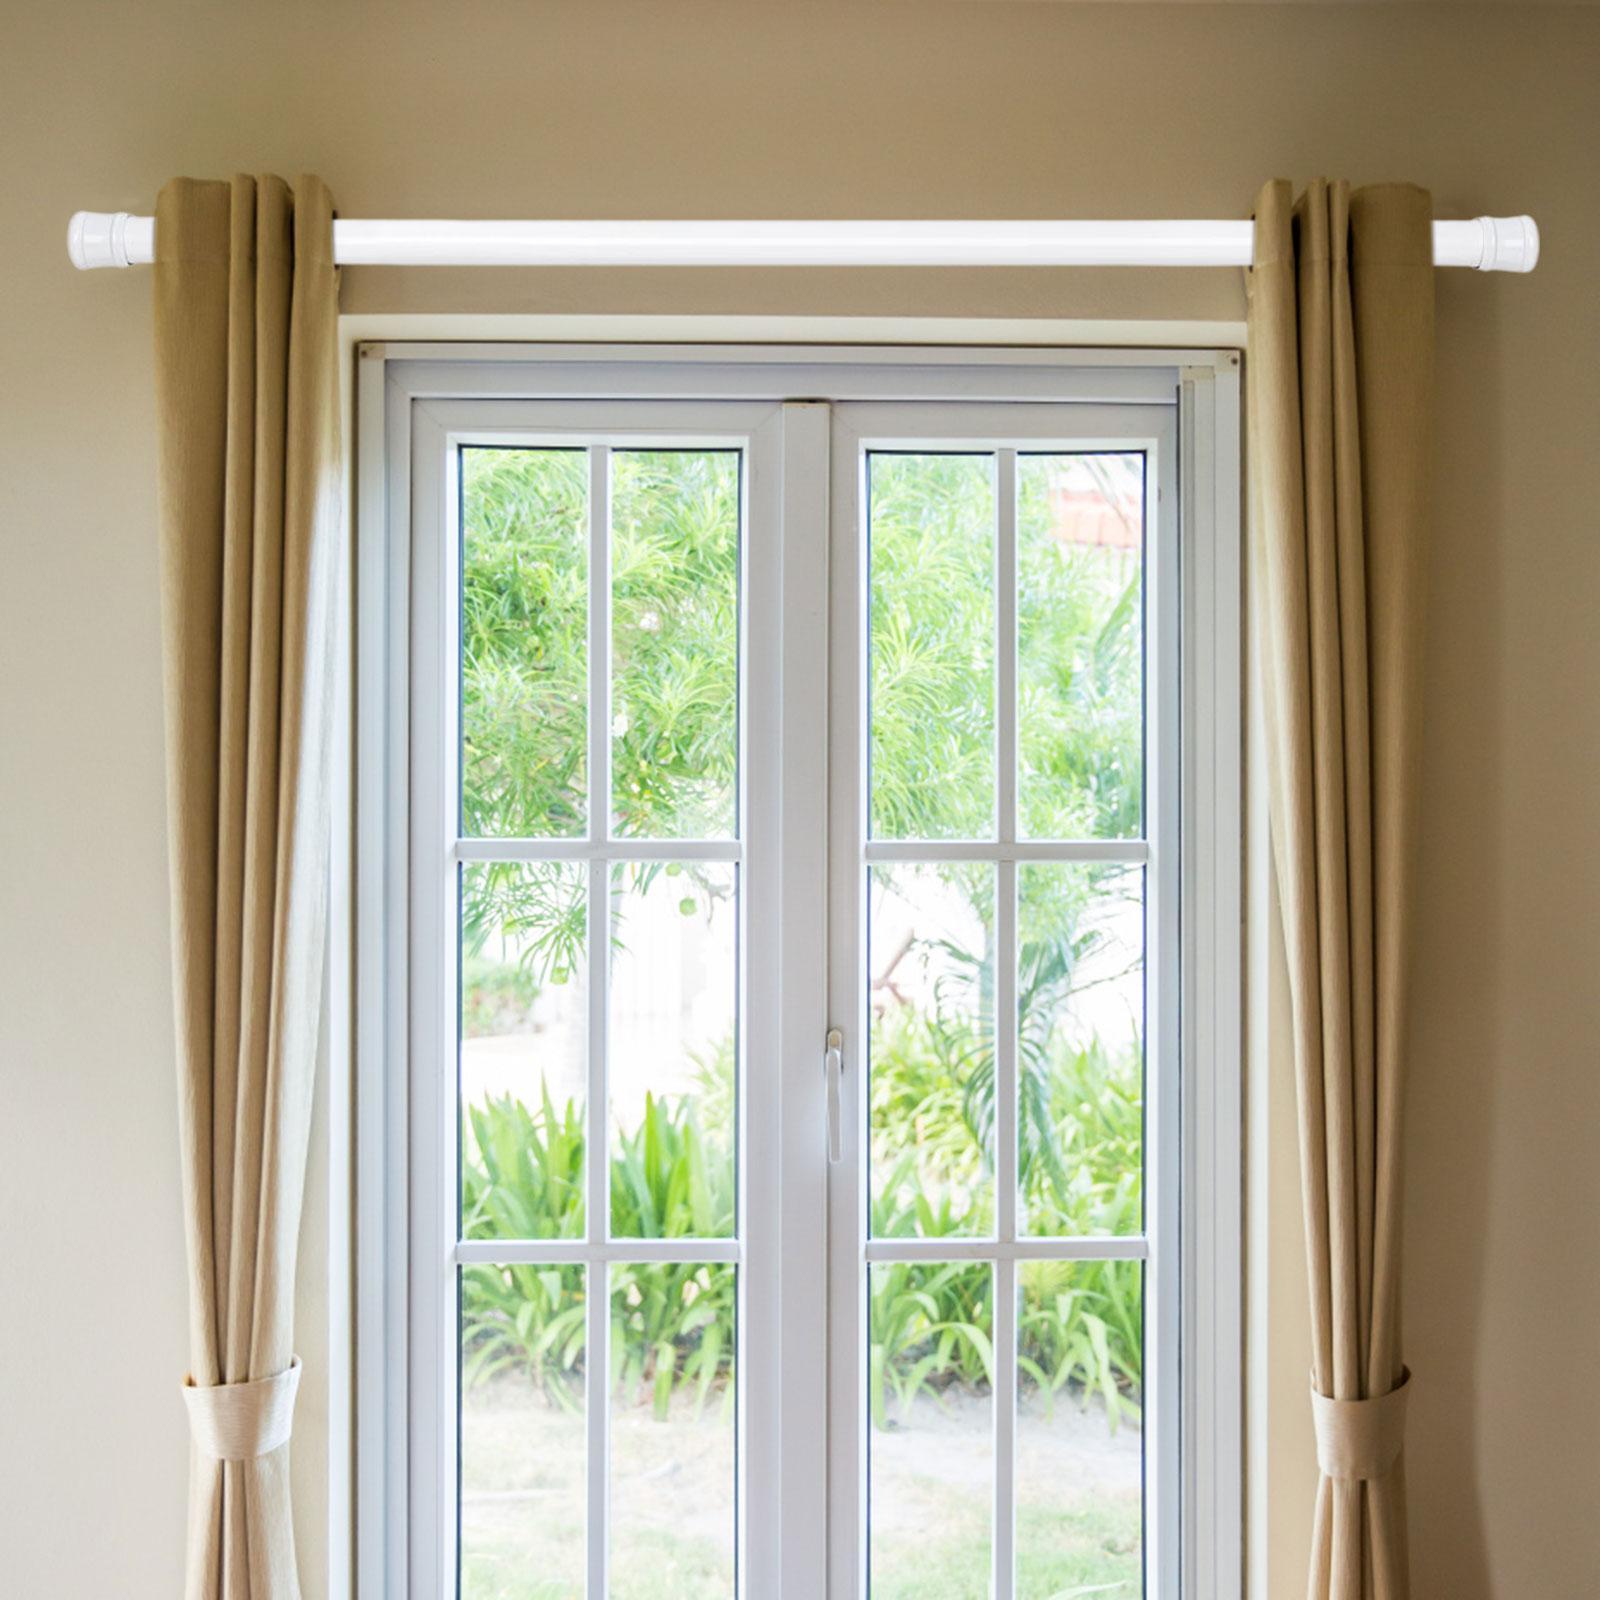 Adjustable Tension Shower Curtain Rod Doorway Curtain Rod for Bedroom